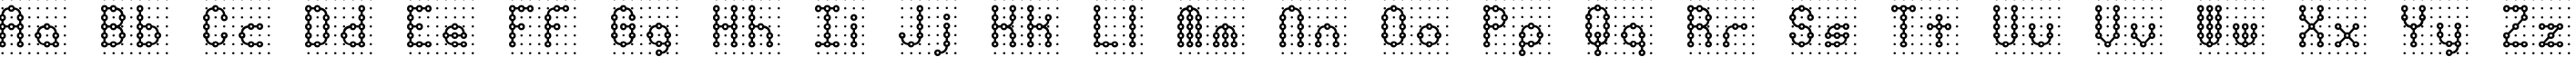 Пример написания английского алфавита шрифтом Pindown Plain BRK